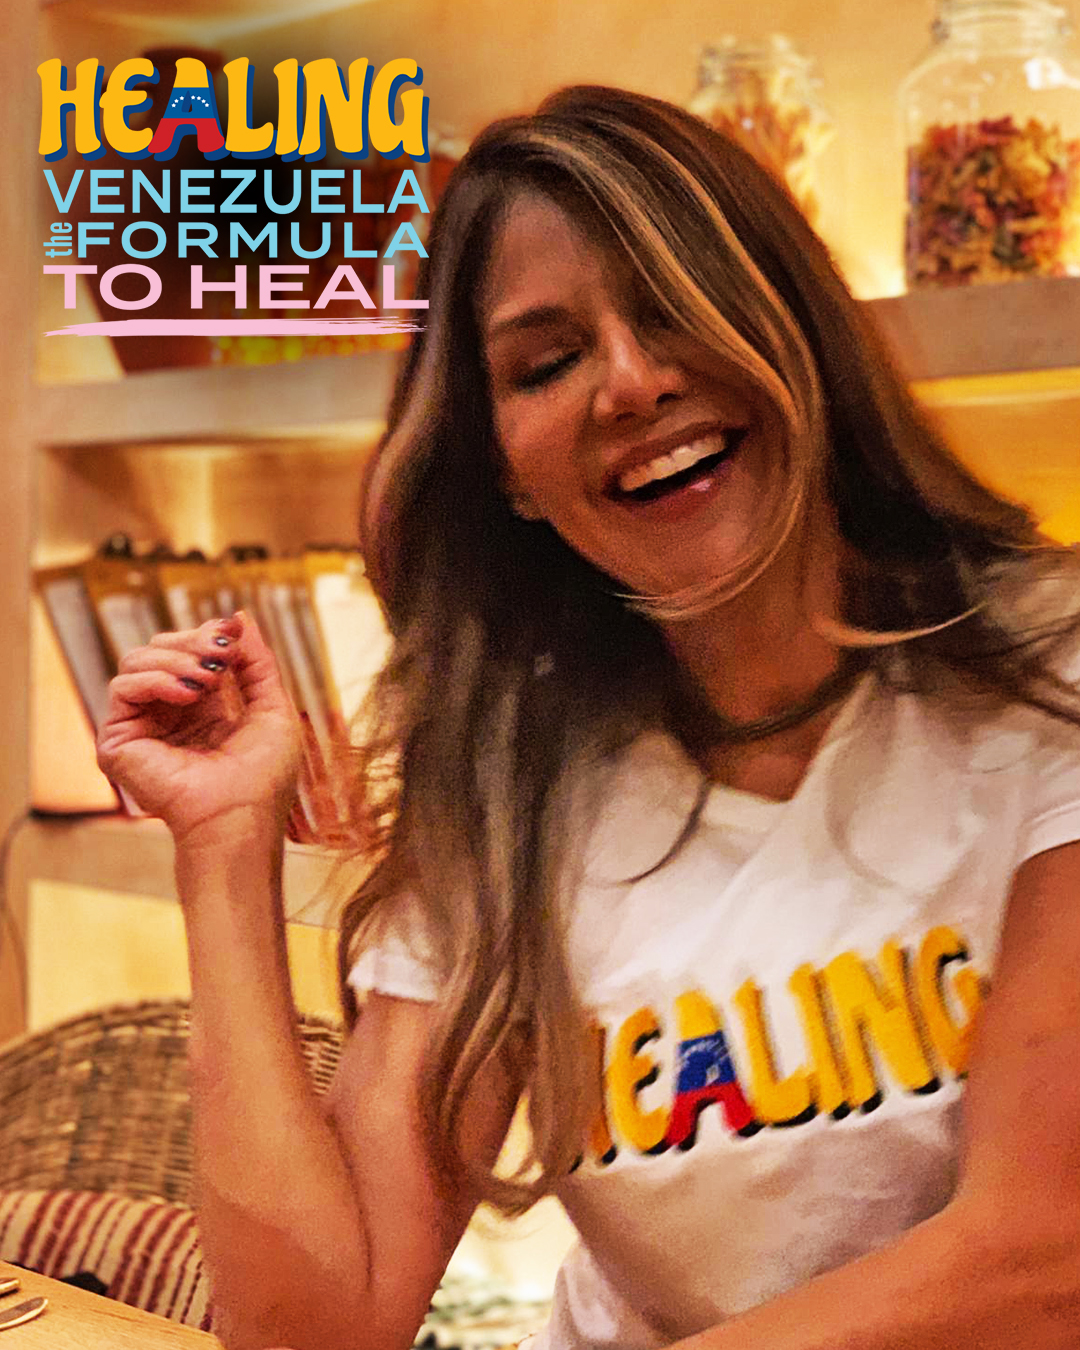 Ivonne Reyes se suma a campaña de Healing Venezuela